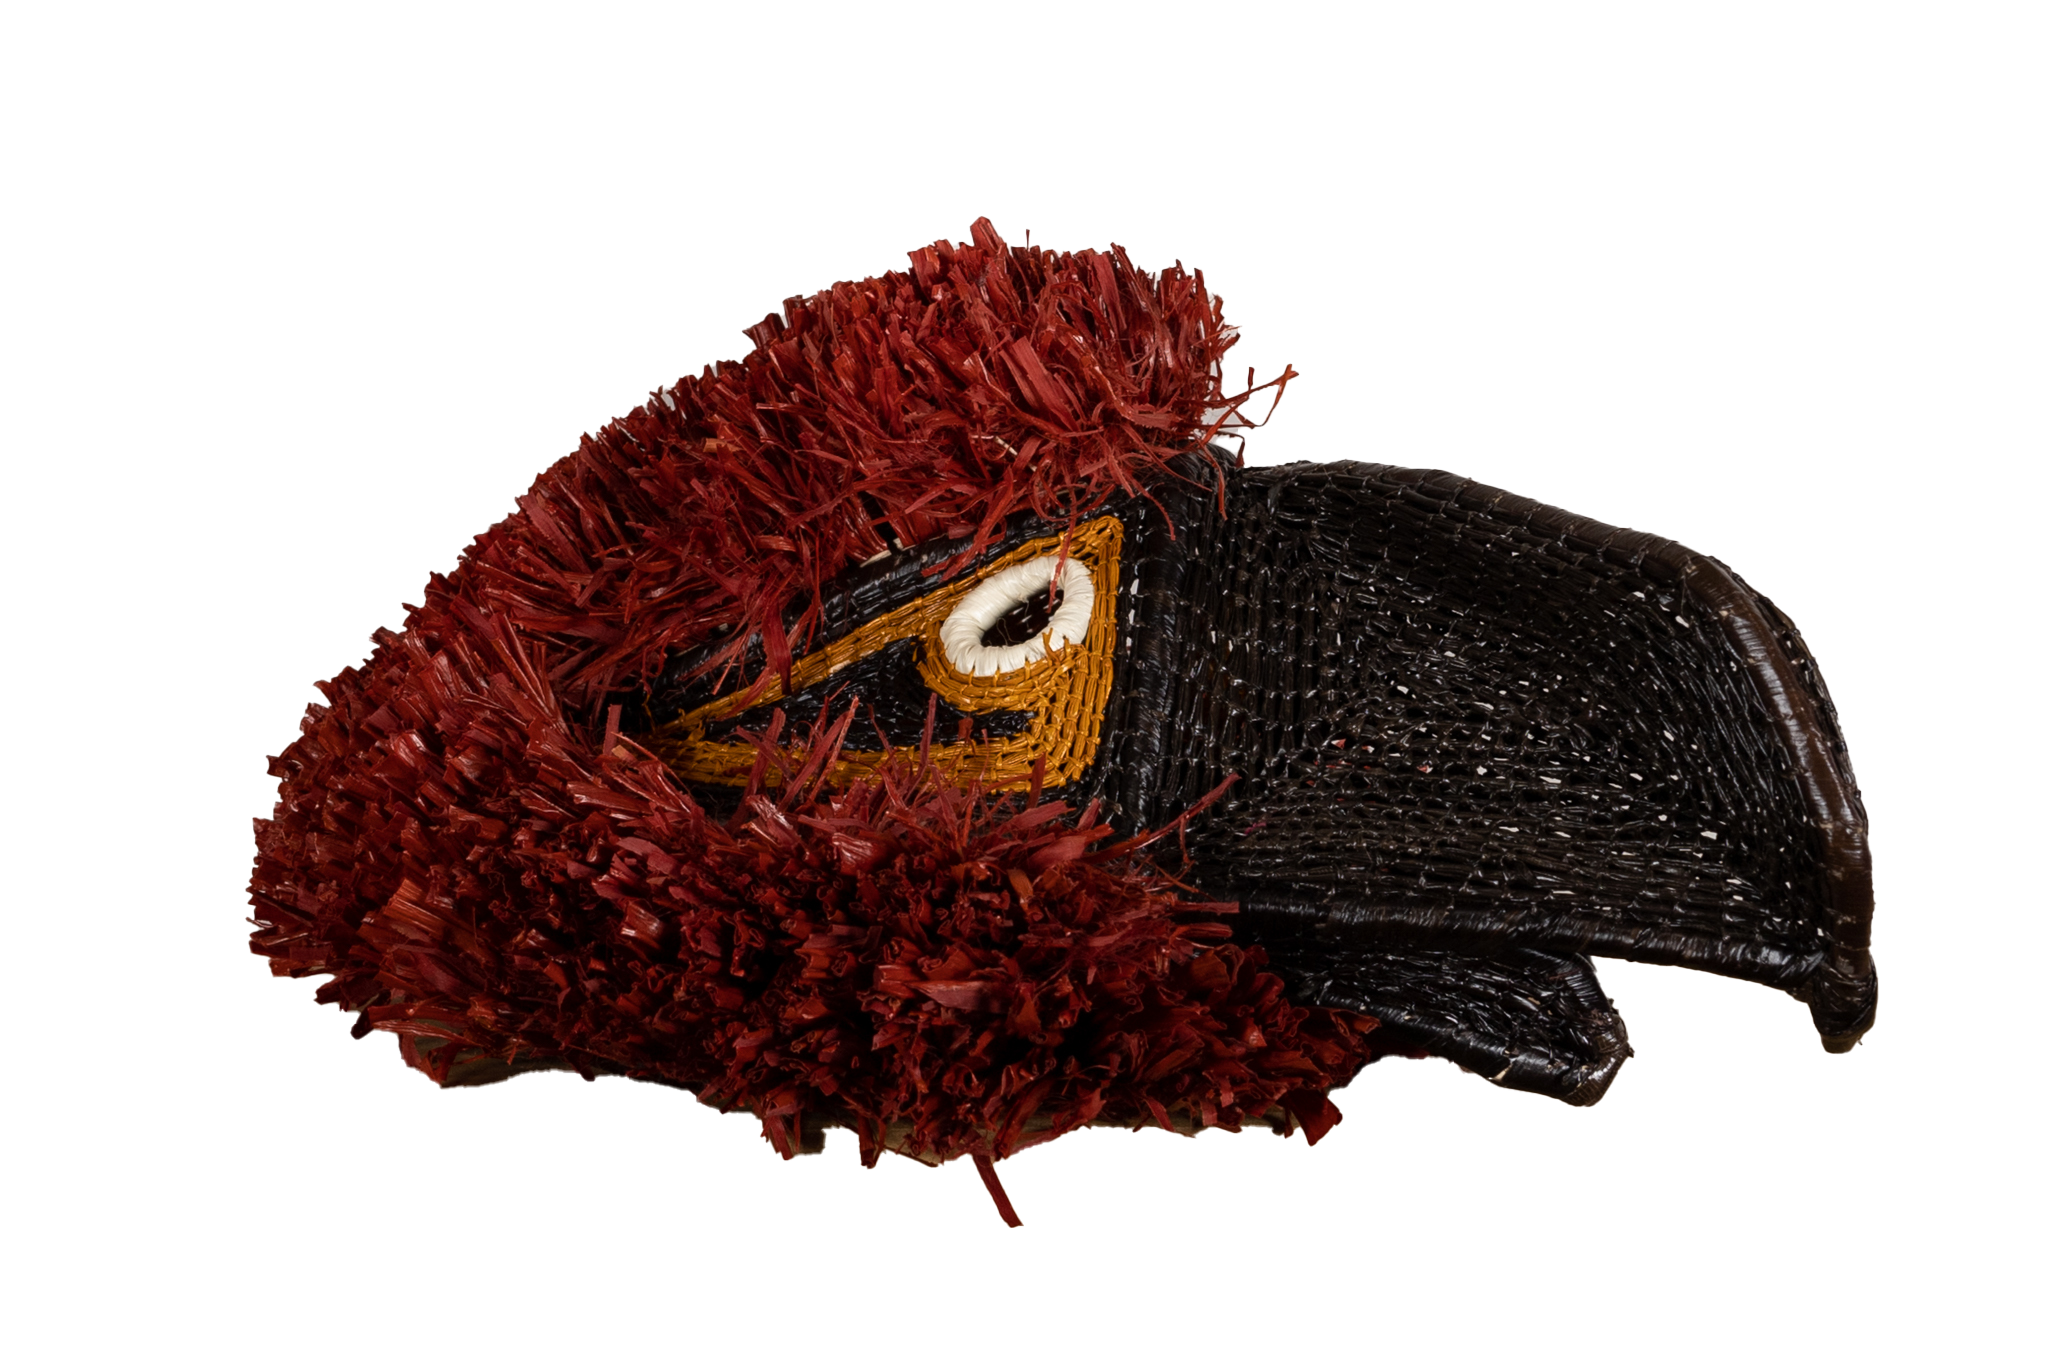 Blood Red Parrot Bird Mask